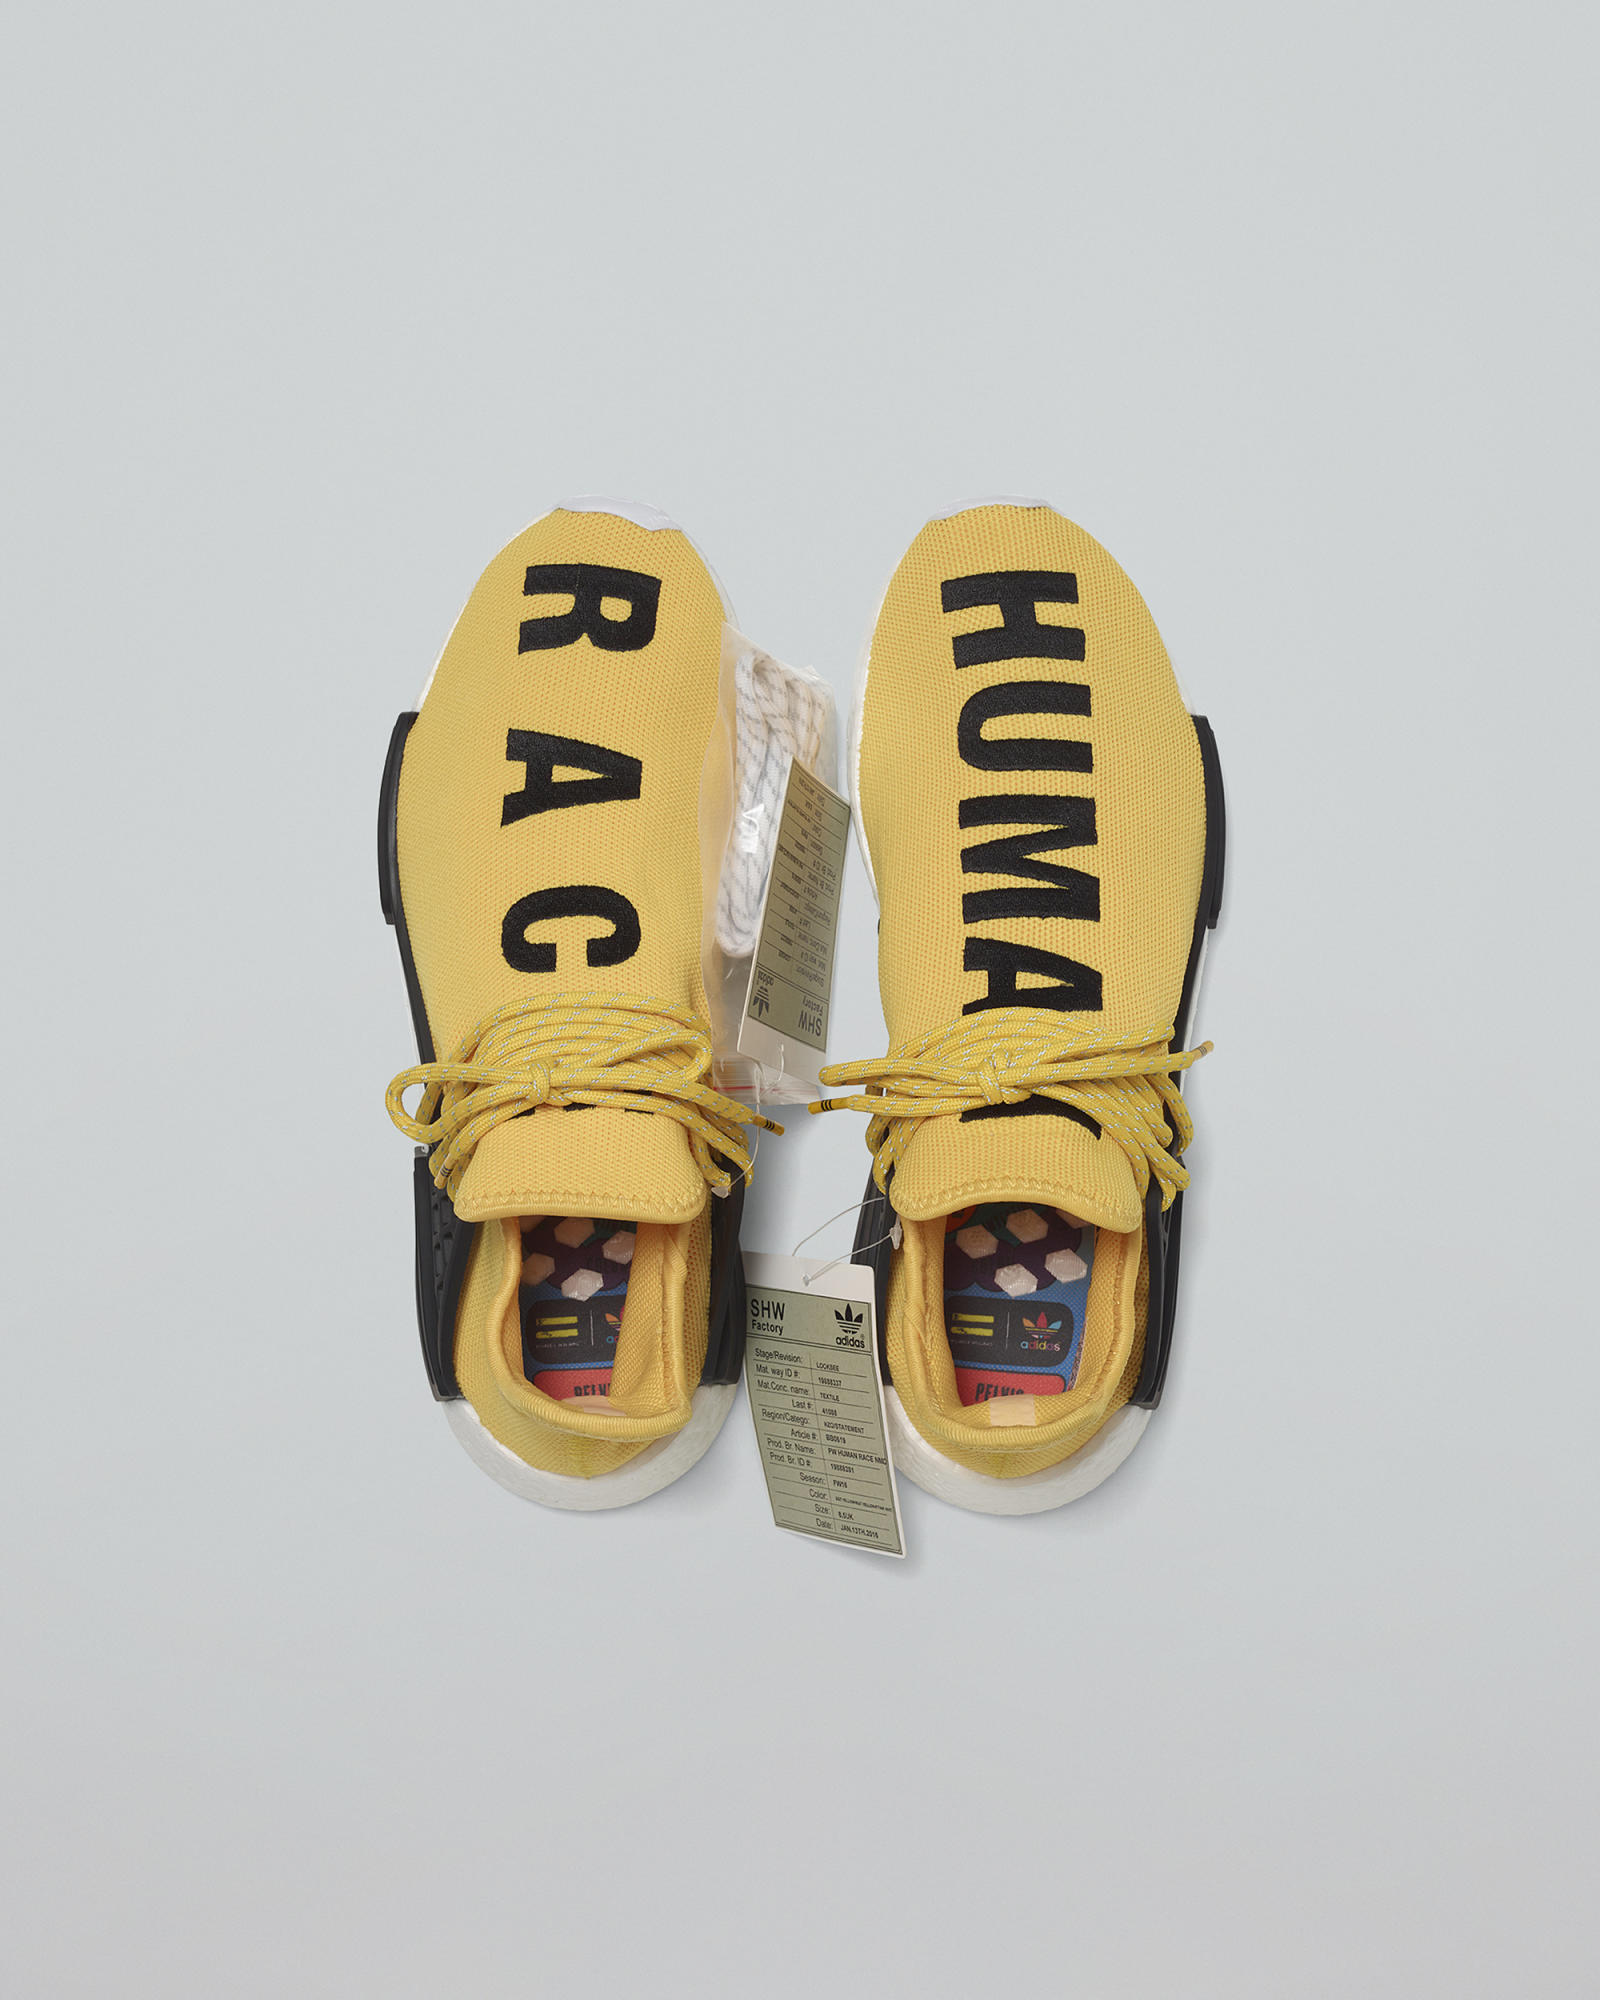 Adidas-NMD-Hu-Human-Race-Lot-of-4-Pairs-5